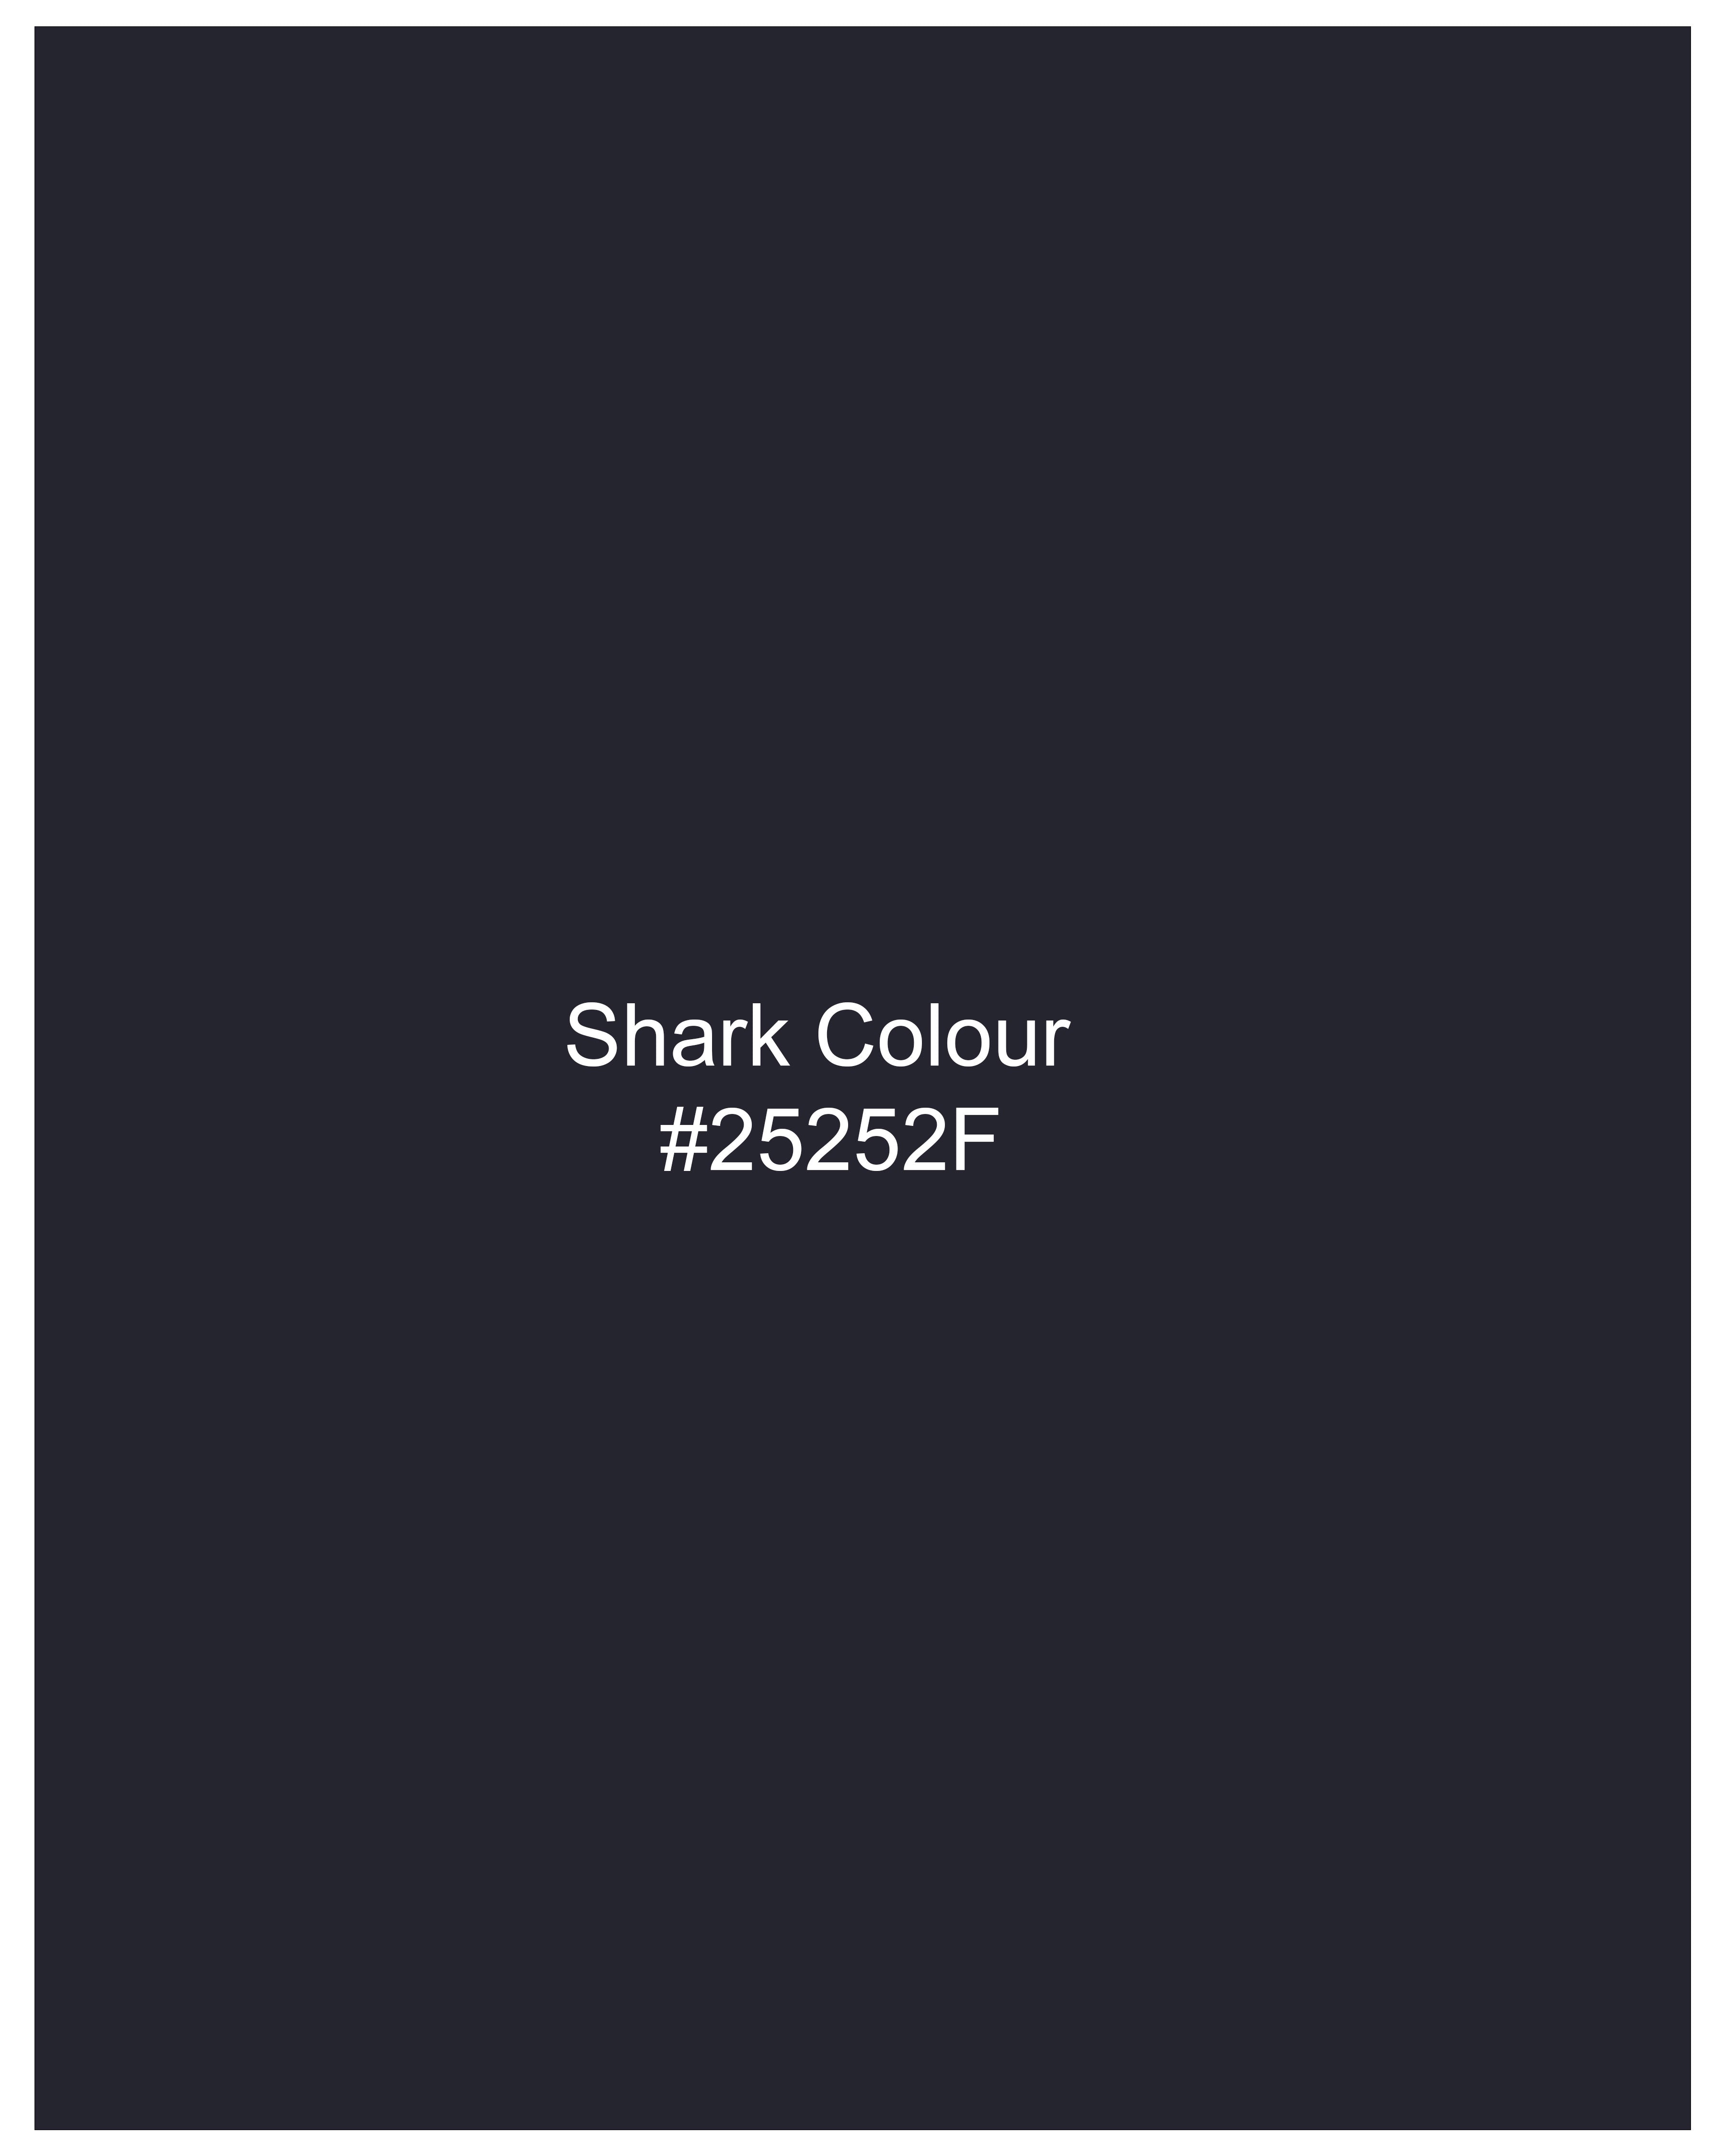 Shark Navy Blue Square Printed Super Soft Premium Cotton Designer Shirt 9758-P369-38, 9758-P369-H-38, 9758-P369-39, 9758-P369-H-39, 9758-P369-40, 9758-P369-H-40, 9758-P369-42, 9758-P369-H-42, 9758-P369-44, 9758-P369-H-44, 9758-P369-46, 9758-P369-H-46, 9758-P369-48, 9758-P369-H-48, 9758-P369-50, 9758-P369-H-50, 9758-P369-52, 9758-P369-H-52